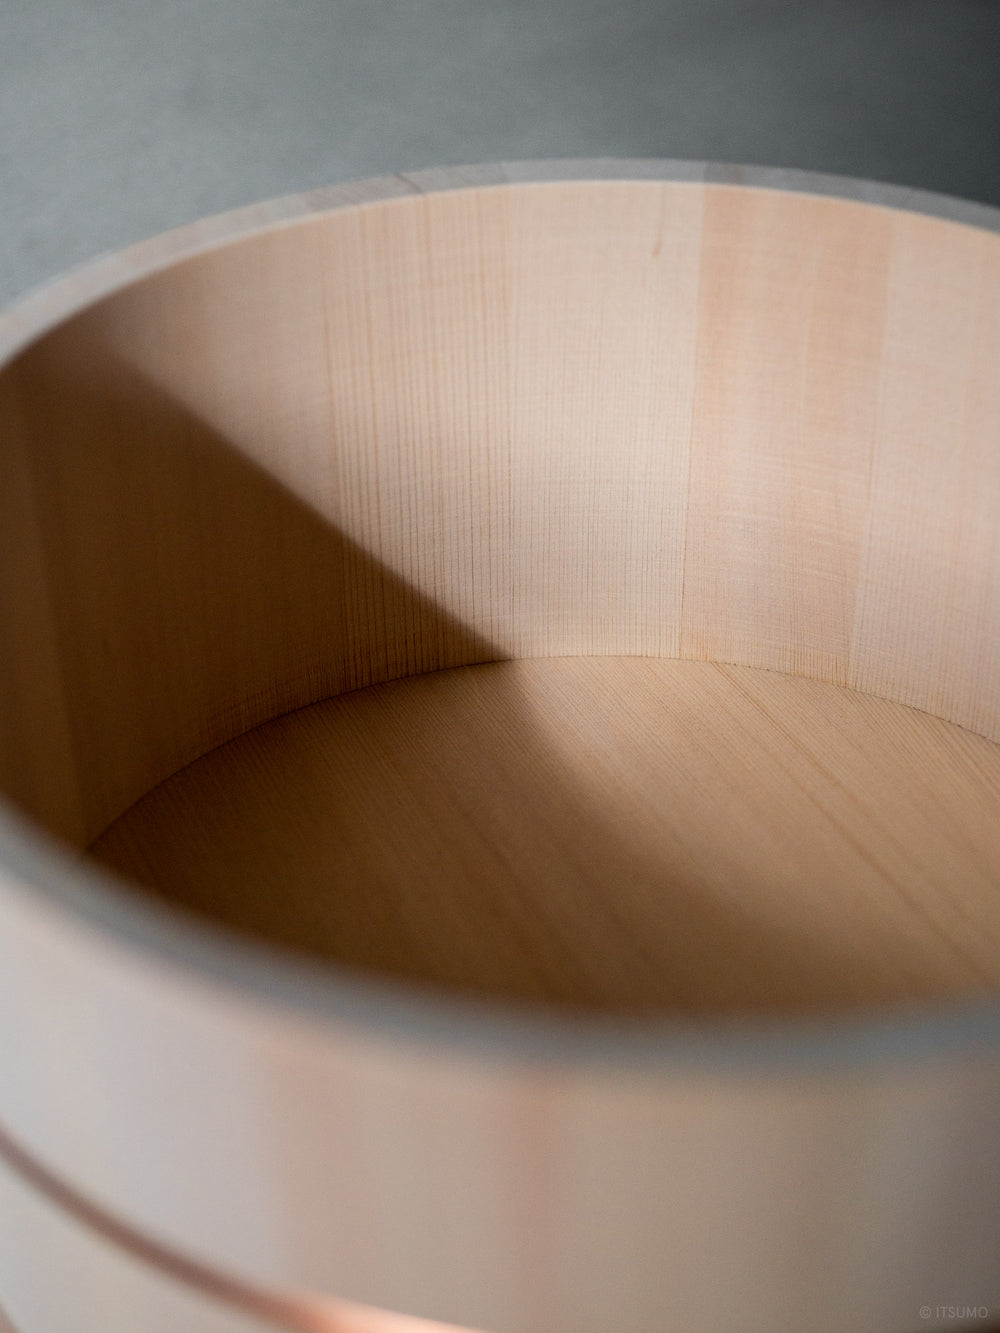 Close up of the wood grain on a Japanese hinoki wood bath bowl